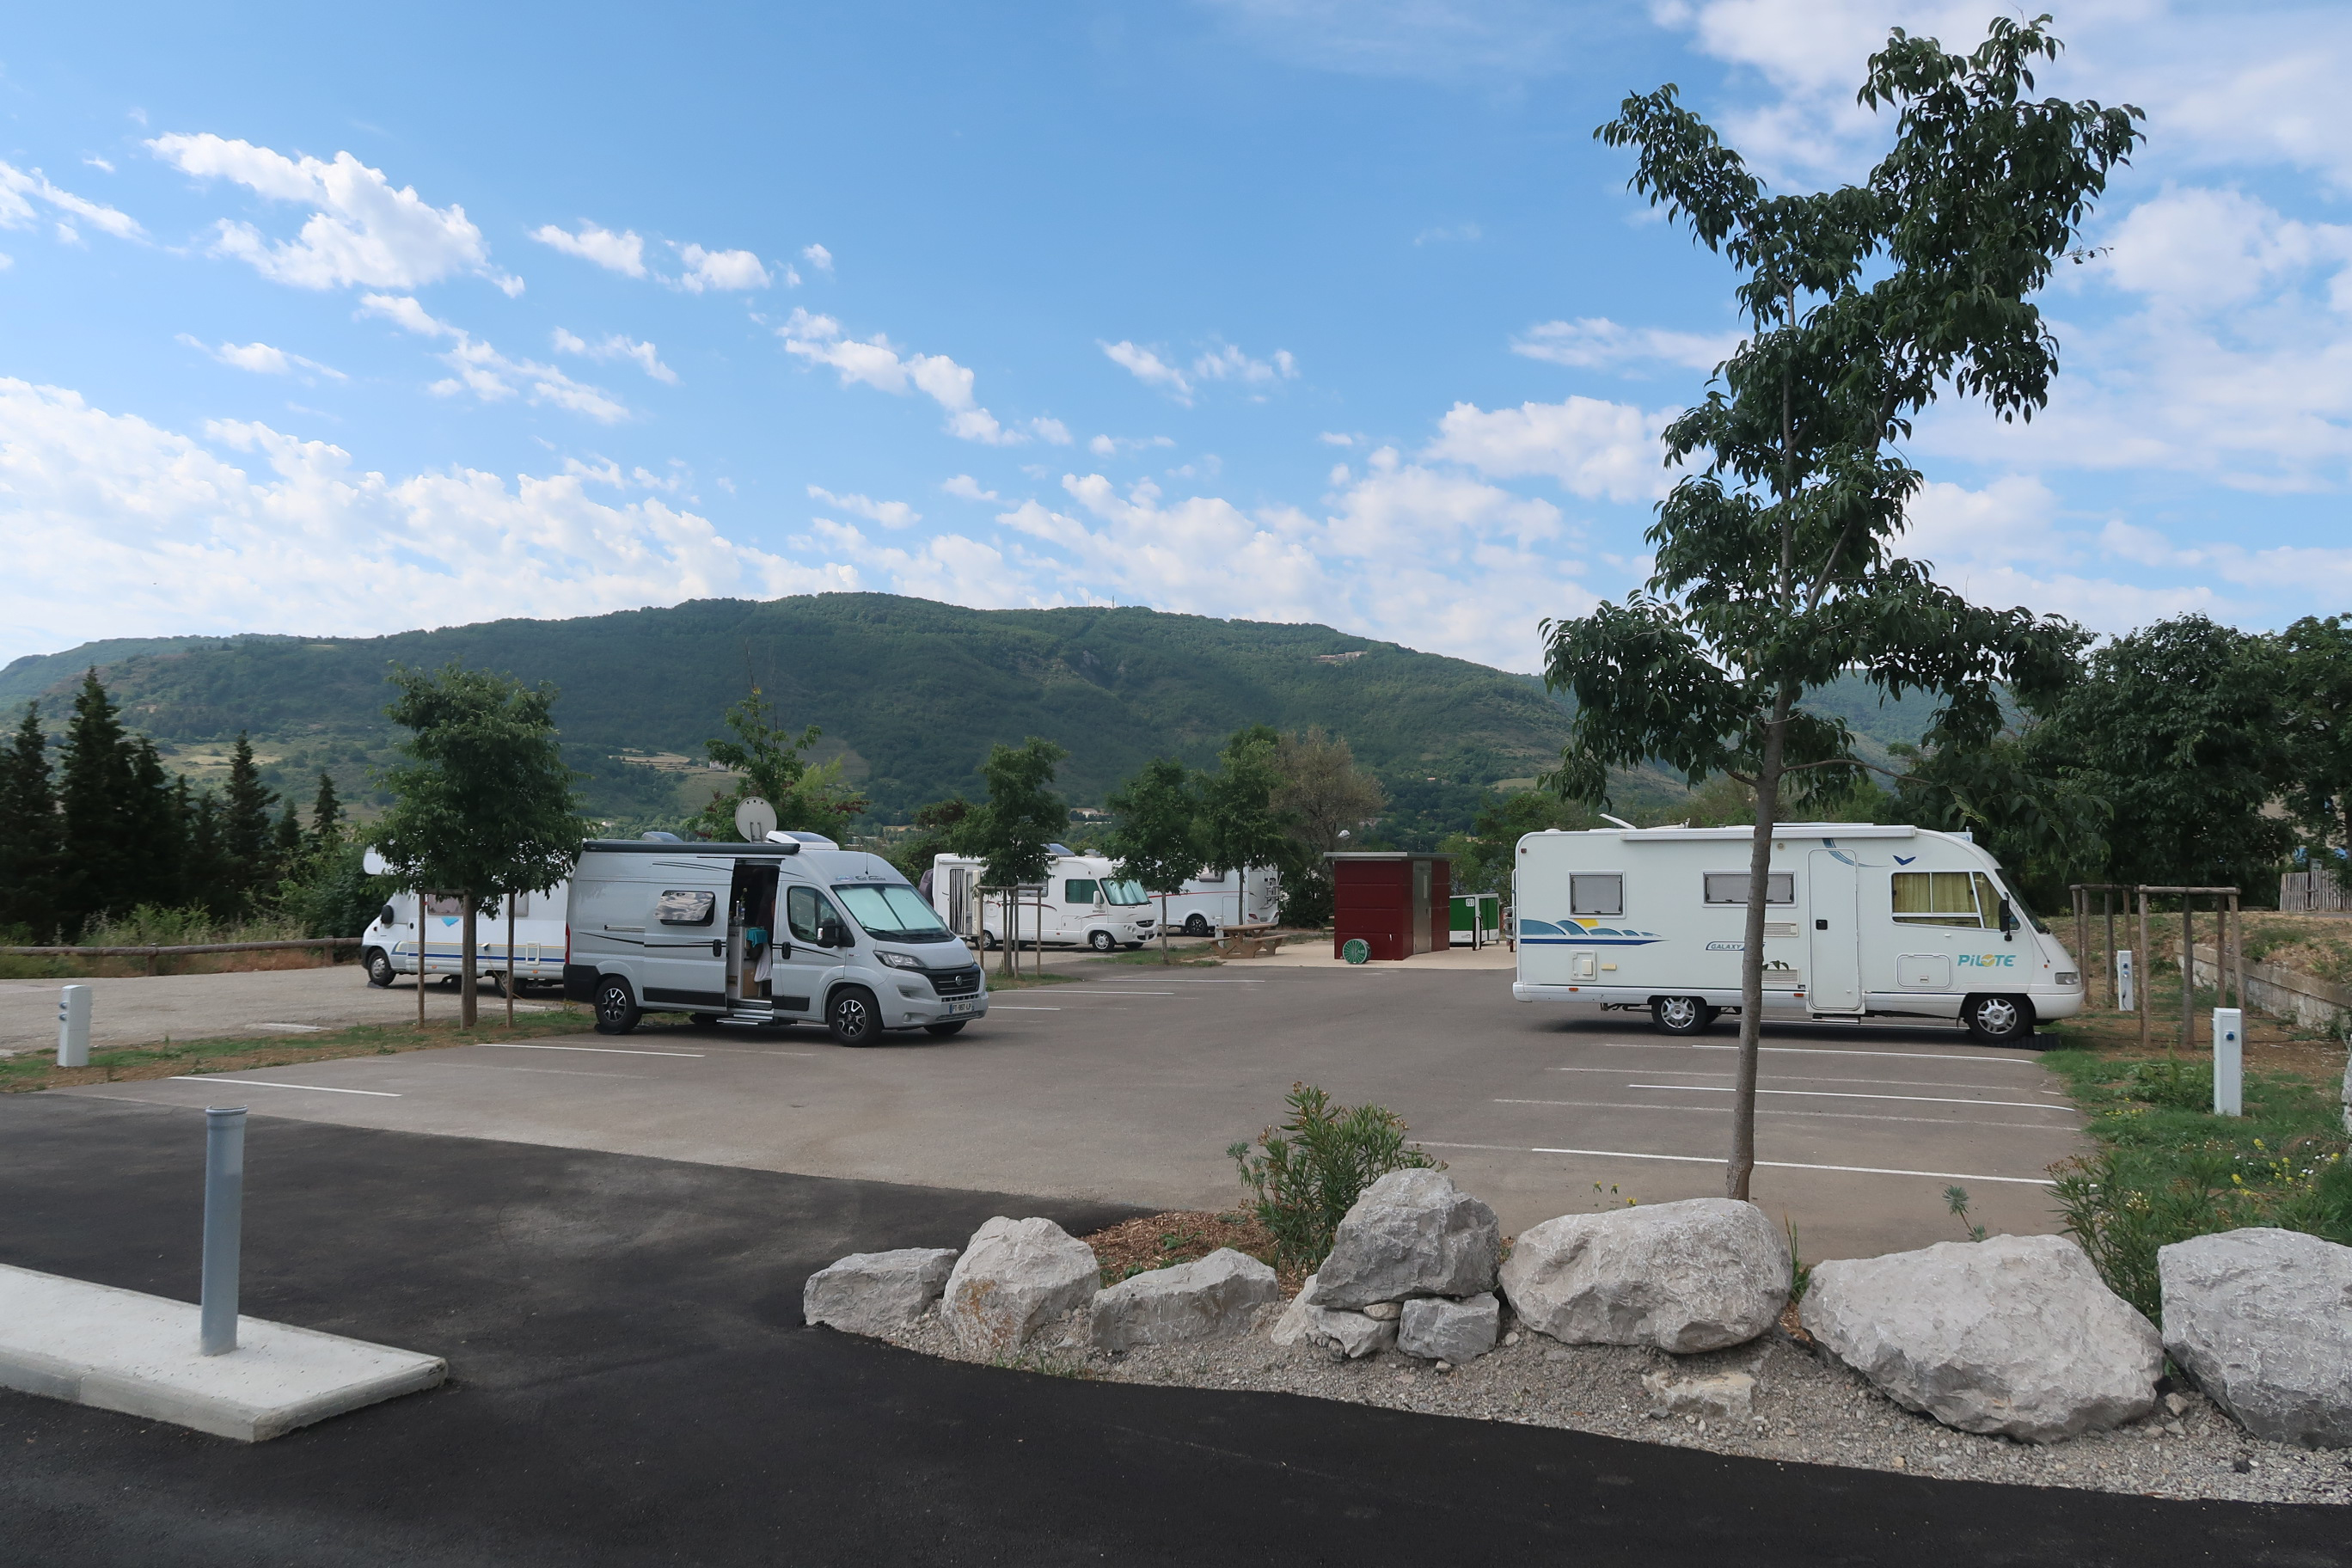 Camping sites : Aire de service camping-car communale